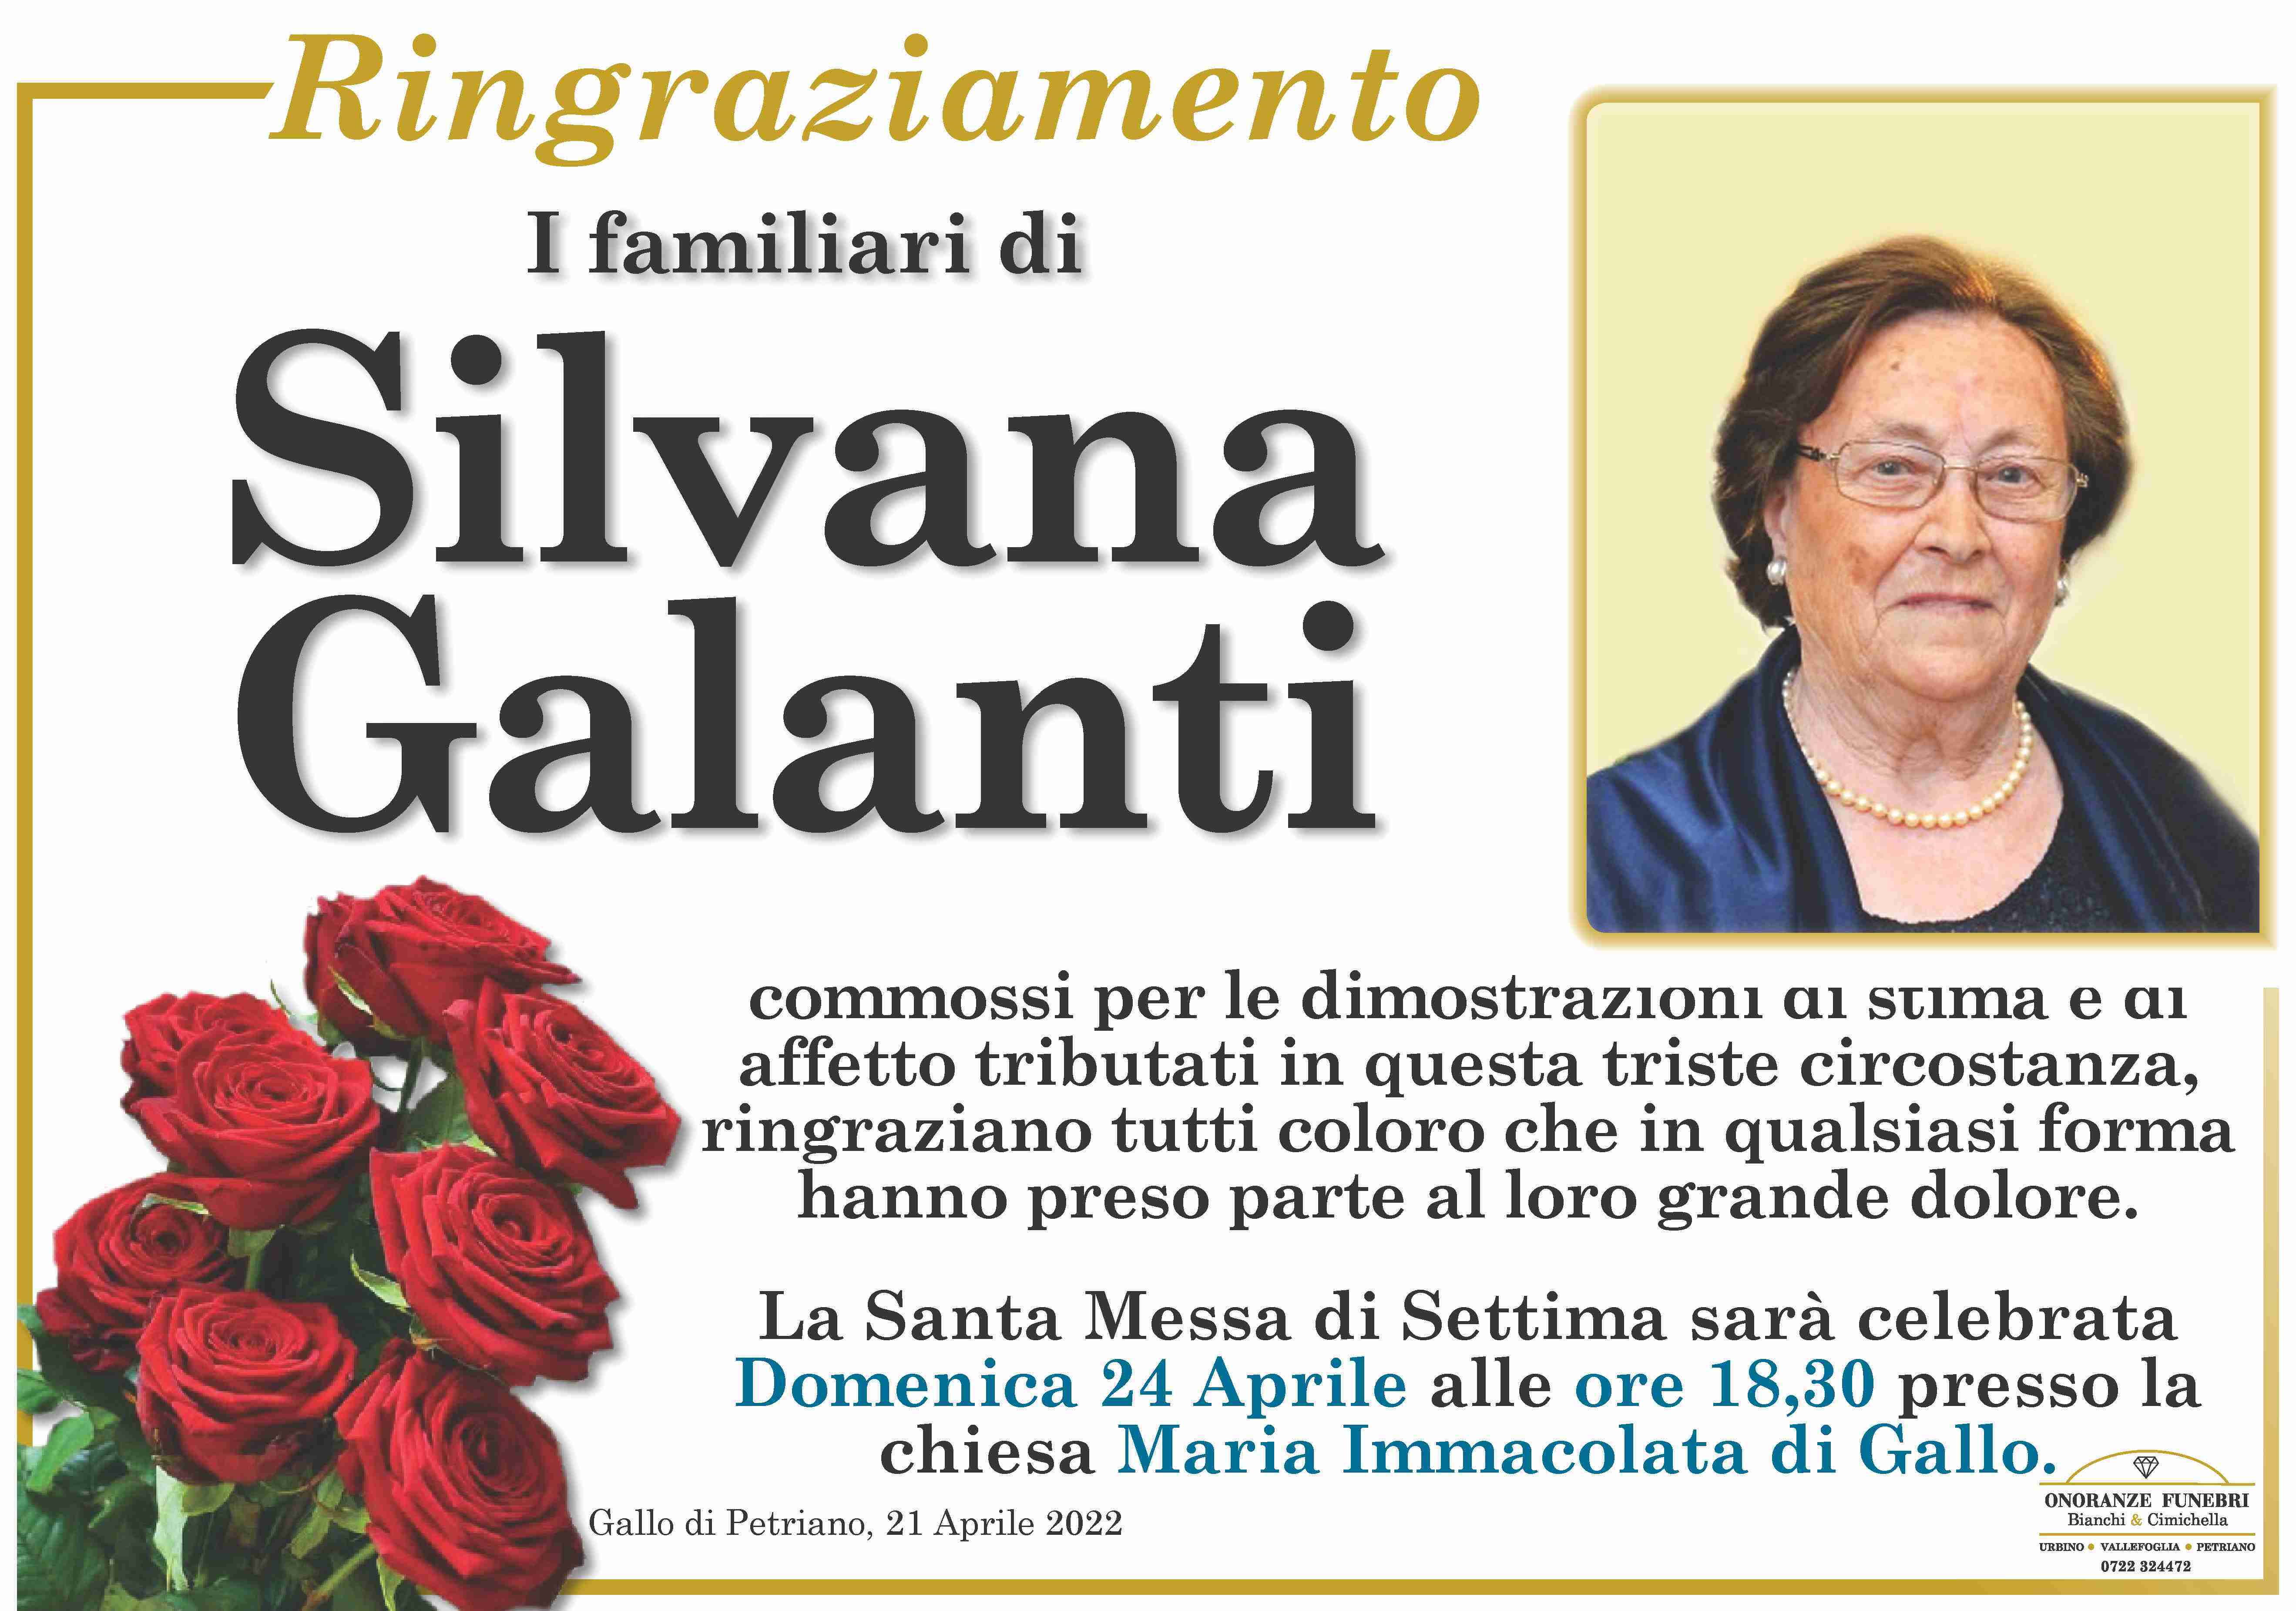 Silvana Galanti